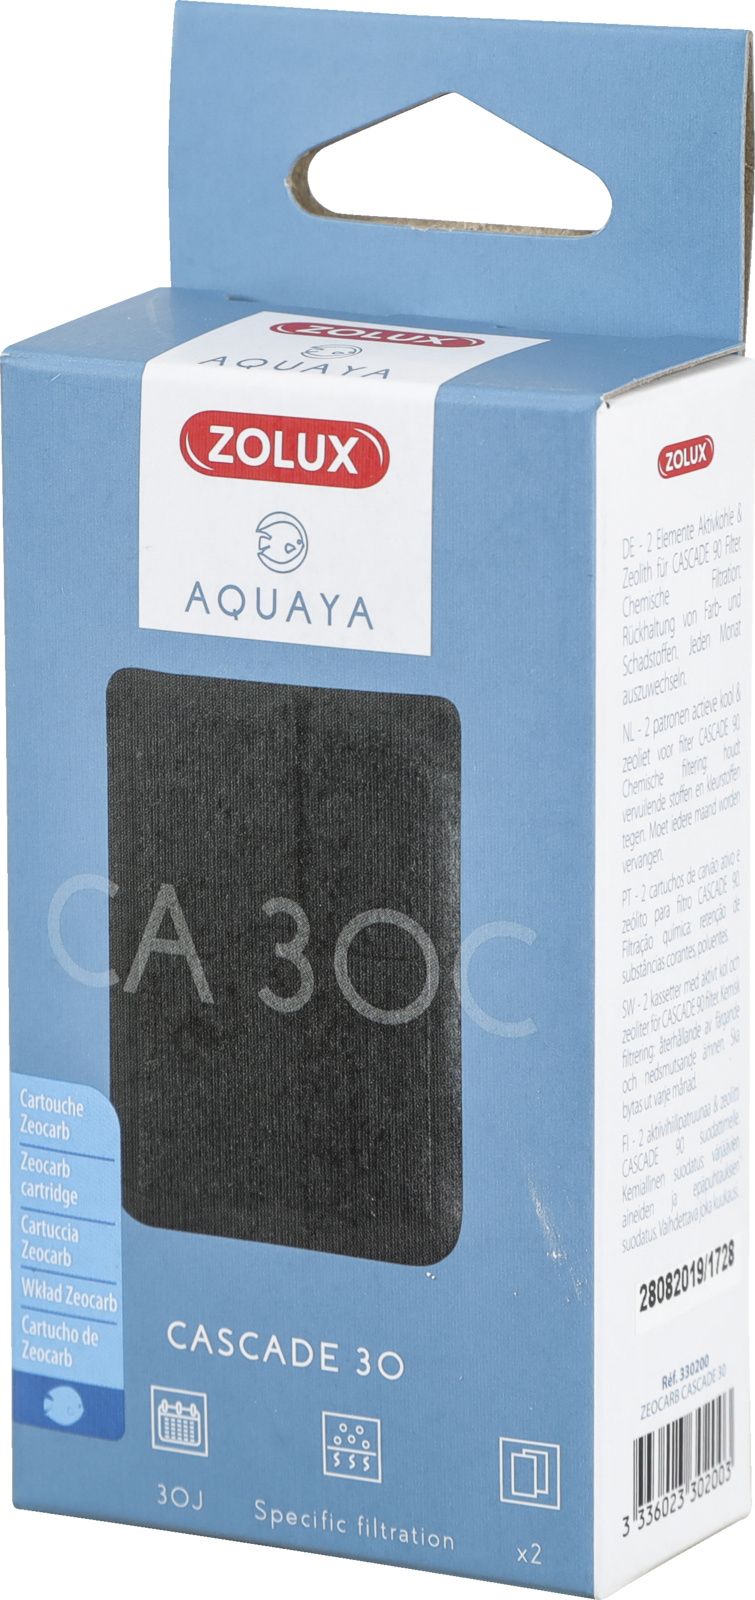 Zolux AQUAYA Wklad Zeocarb Cascade 30 7544703 (3336023302003) akvārija filtrs